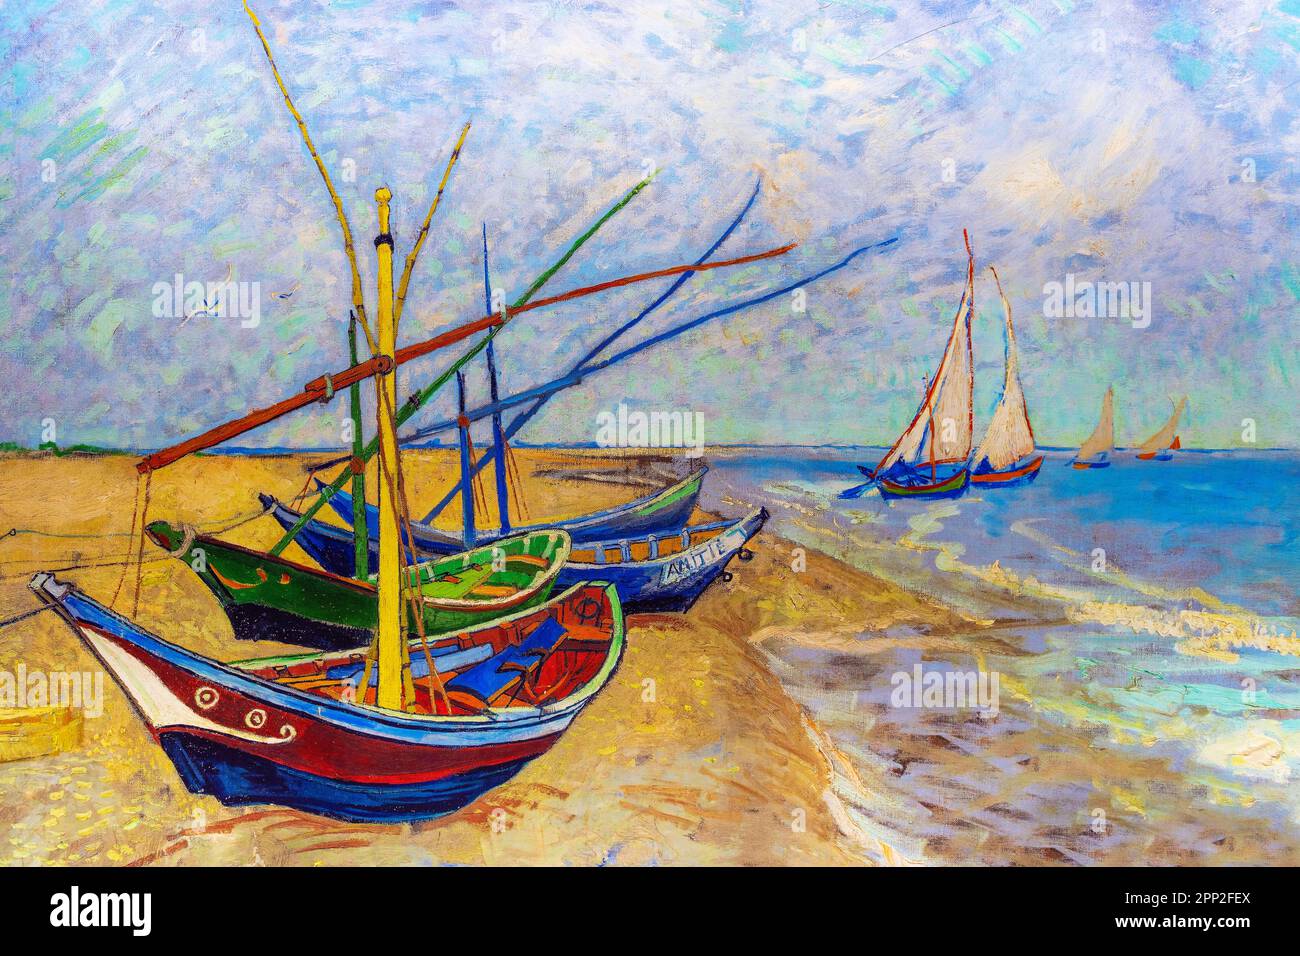 Fishing boats on the beach at Saintes Maries, Vincent Van Gogh painting Stock Photo